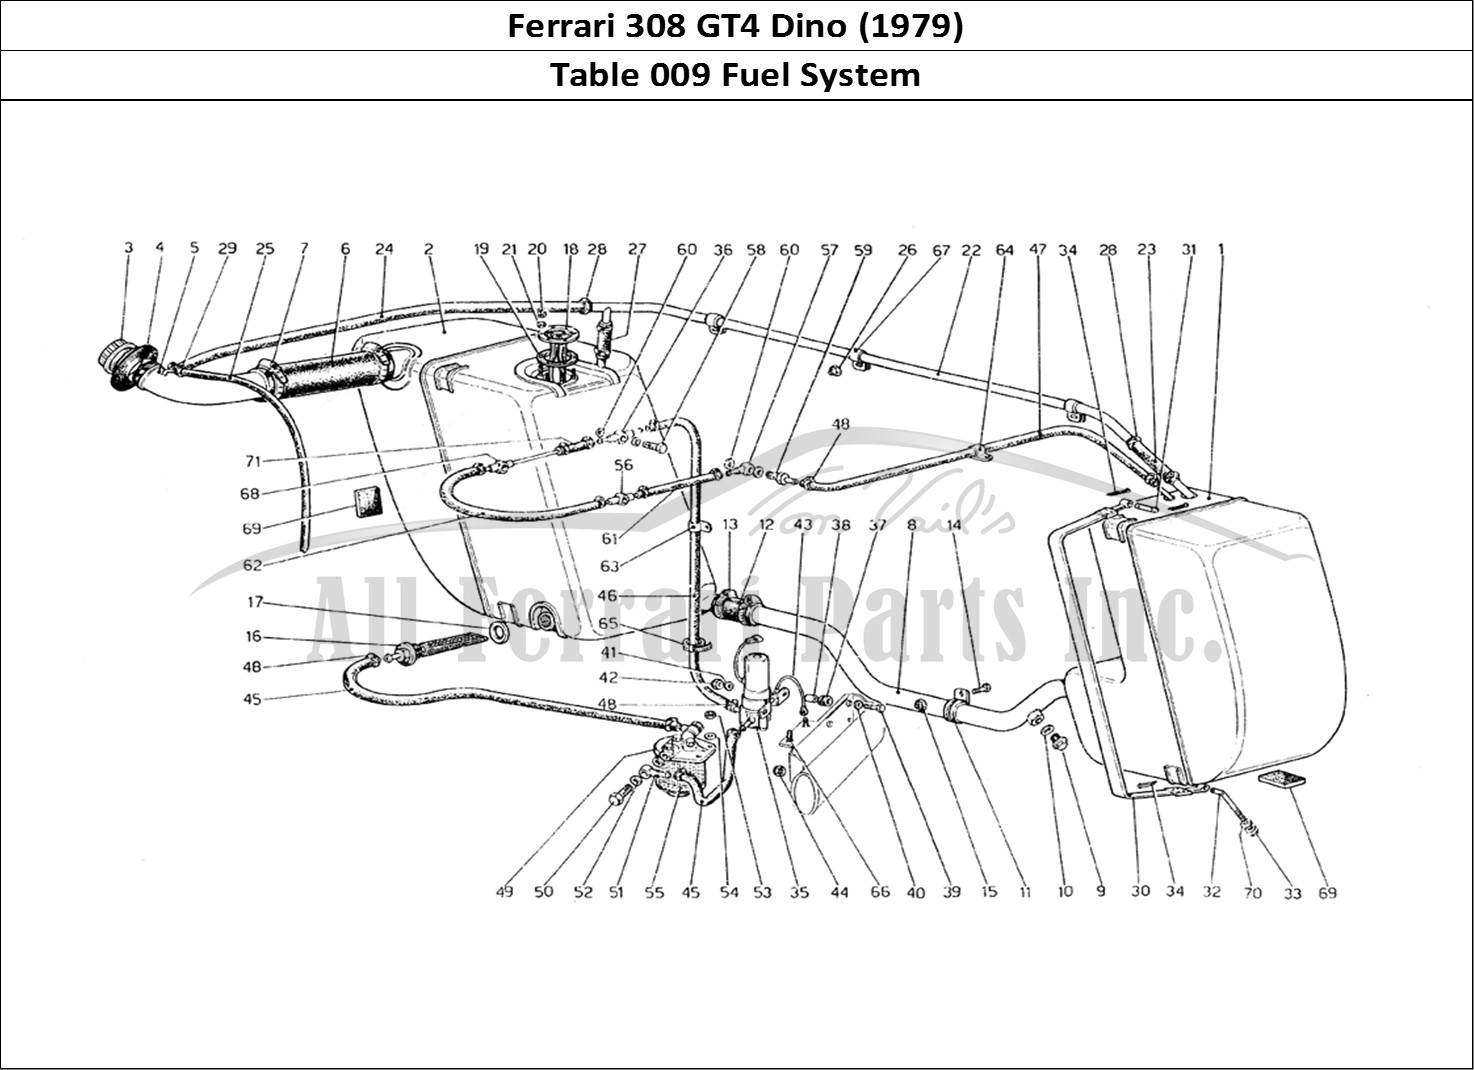 Ferrari Parts Ferrari 308 GT4 Dino (1979) Page 009 Fuel System